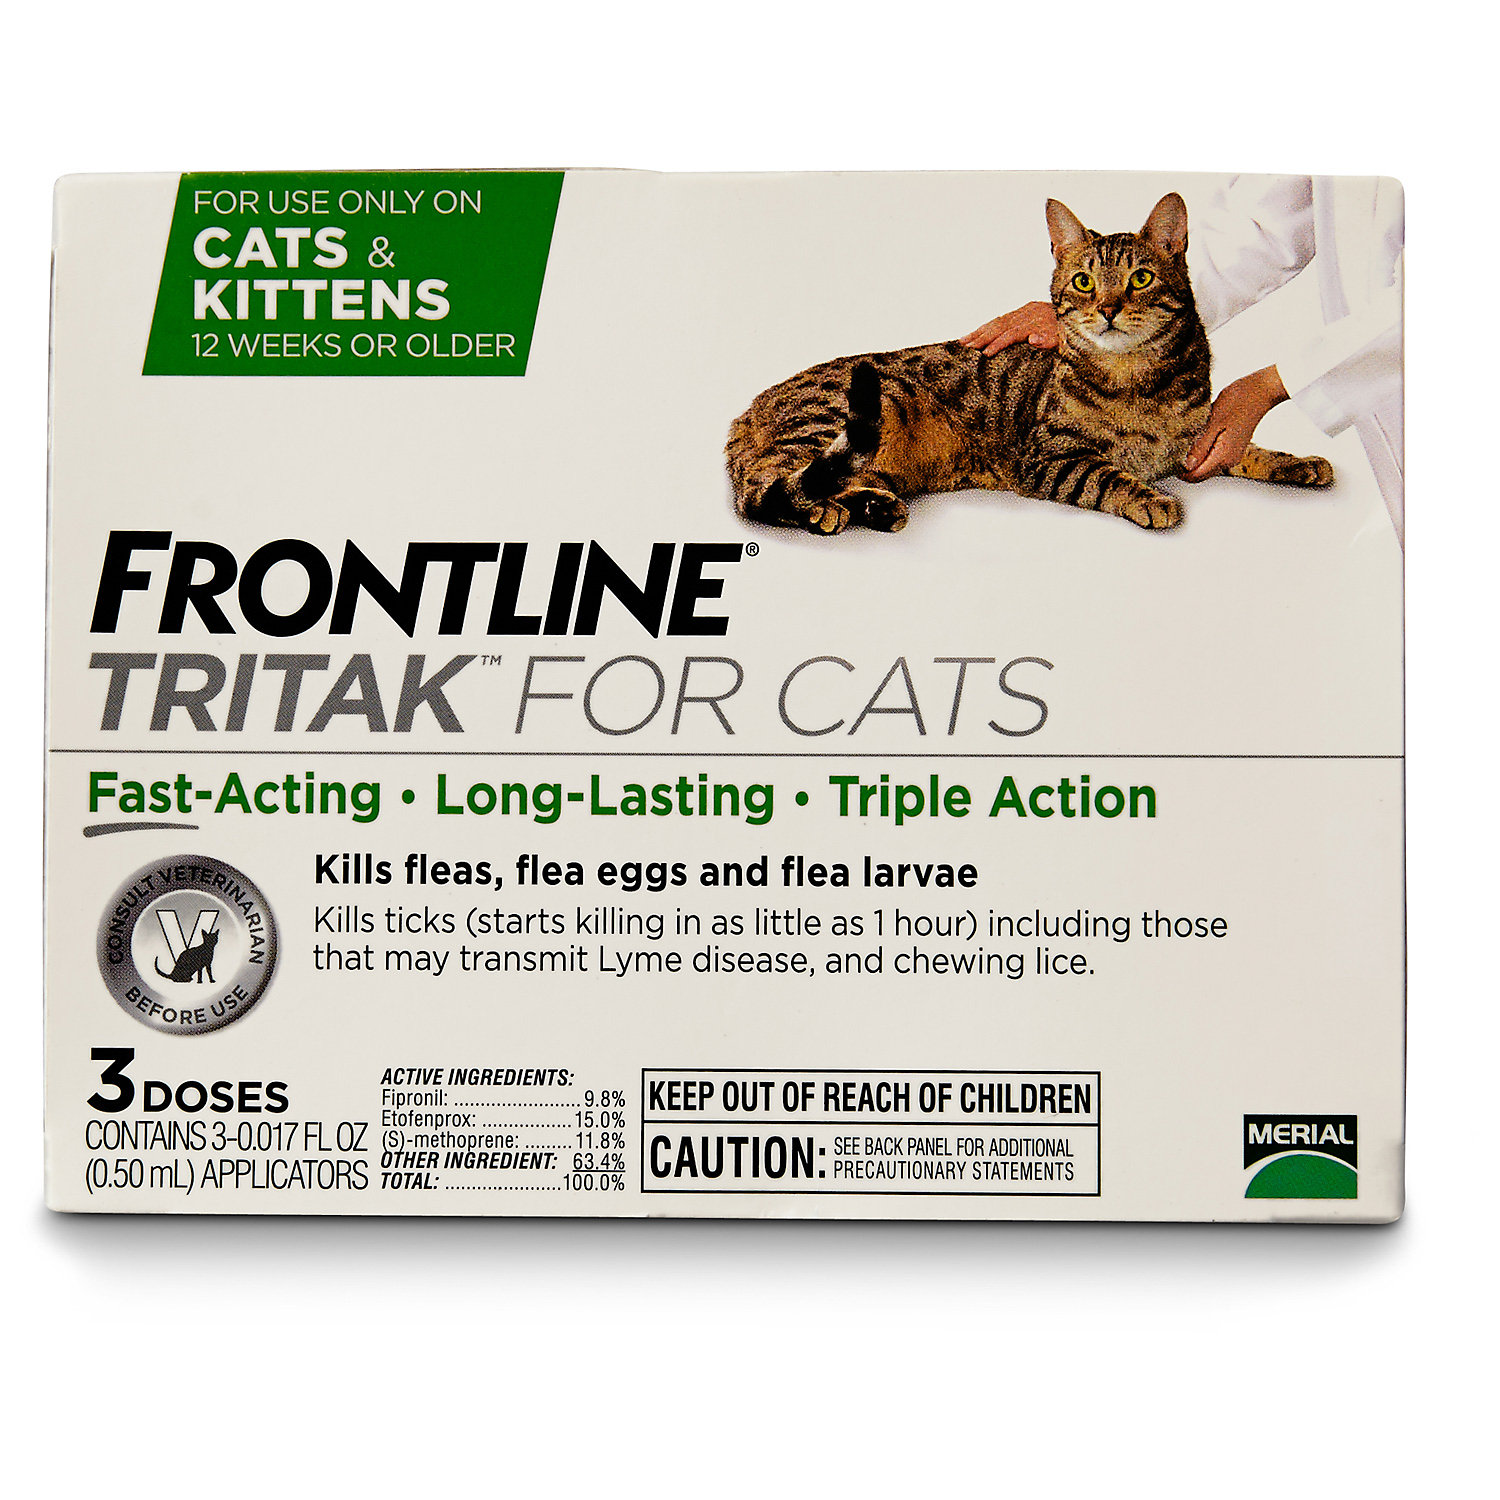 FRONTLINE TRITAK Cat Flea Treatment, For cats 12 weeks or older eBay